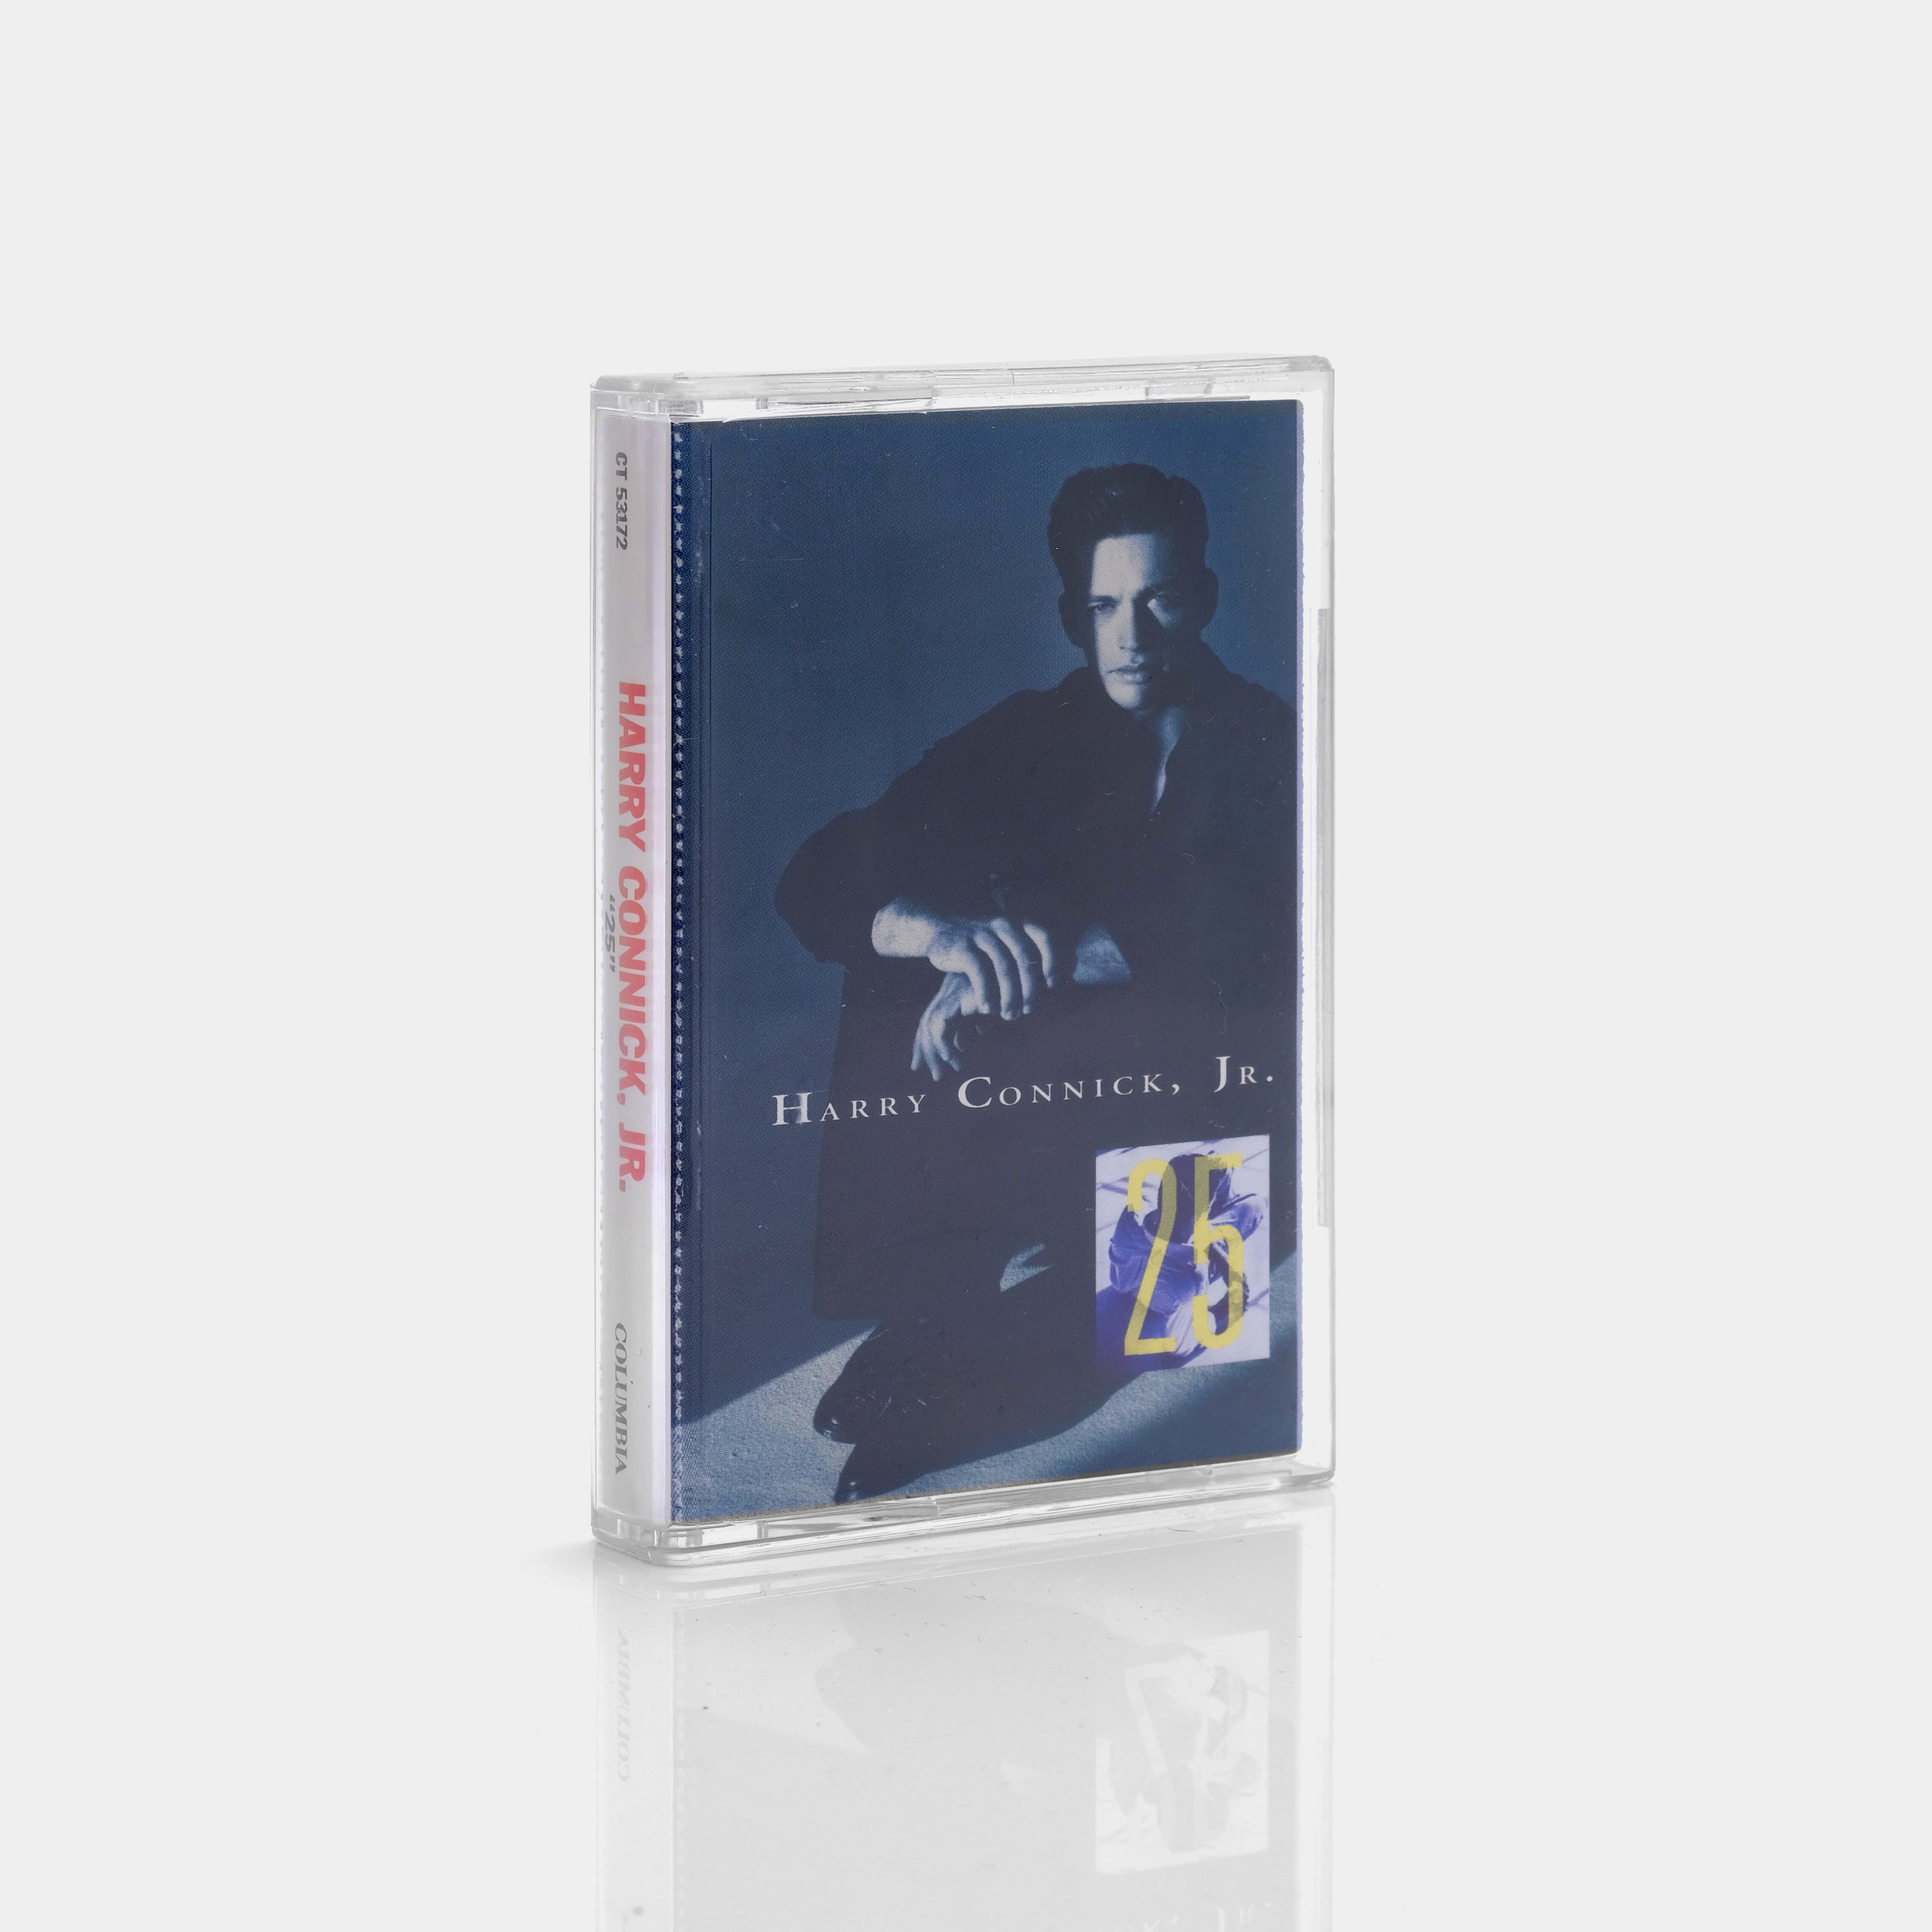 Harry Connick, Jr. - 25 Cassette Tape